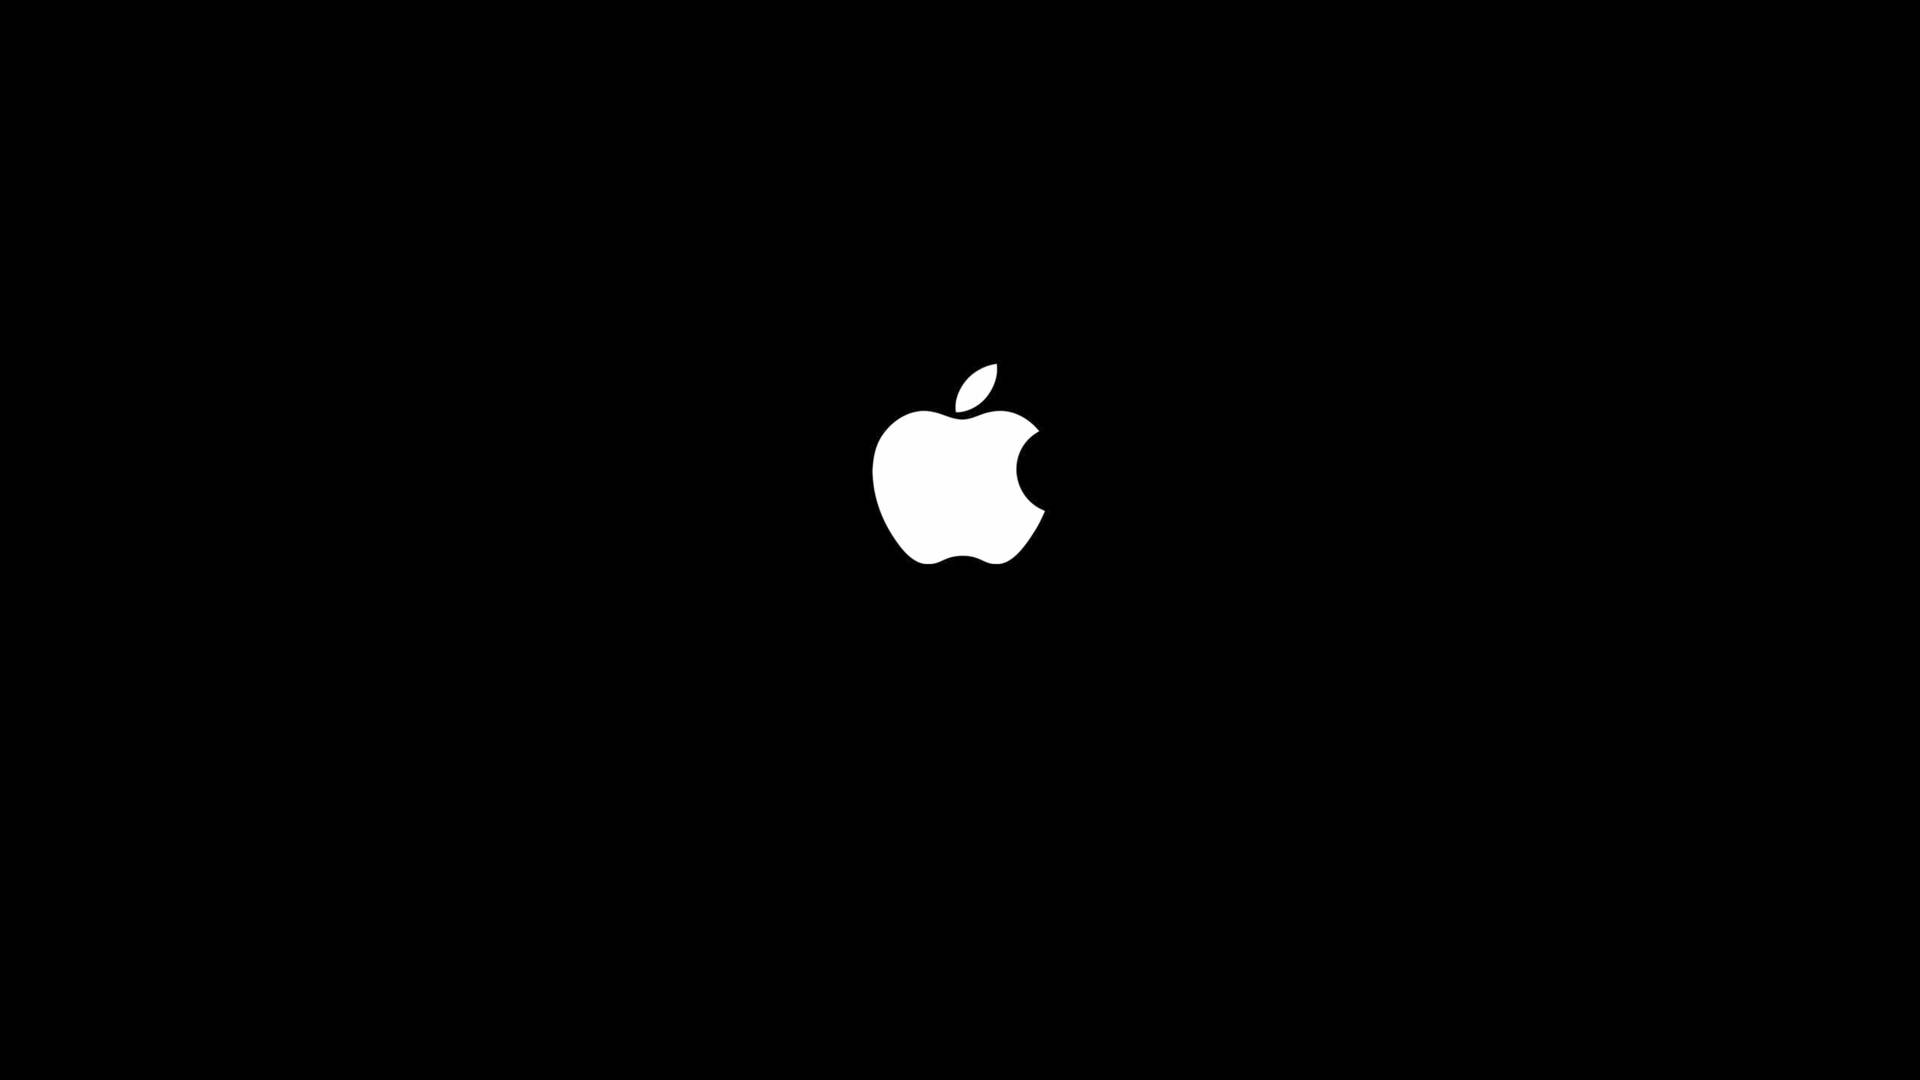 Apple 4k Ultra Hd Black Background